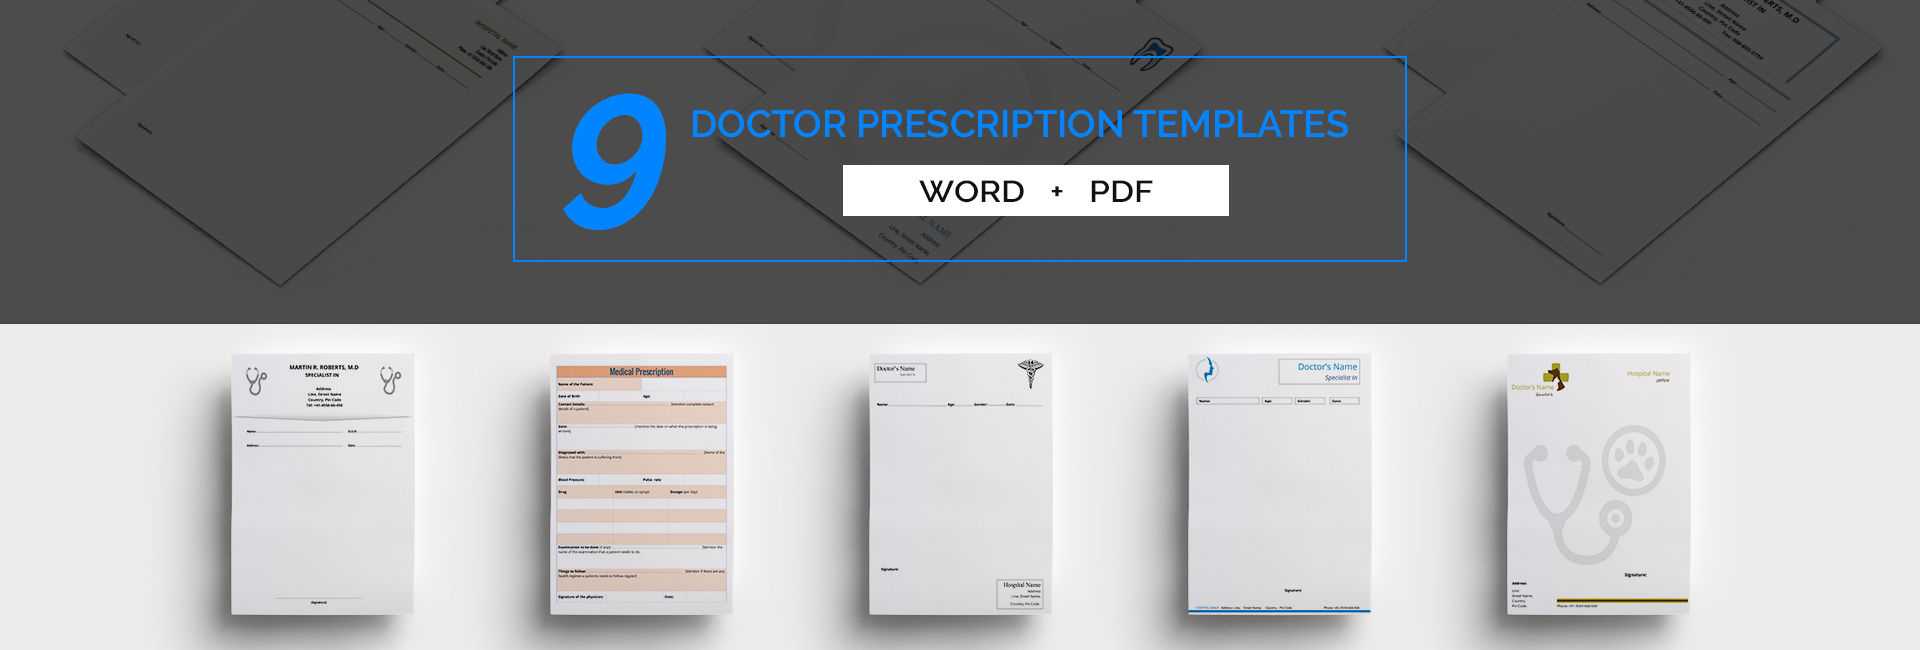 9+ Free Doctor's Prescription Templates – Cardiology With Regard To Doctors Prescription Template Word